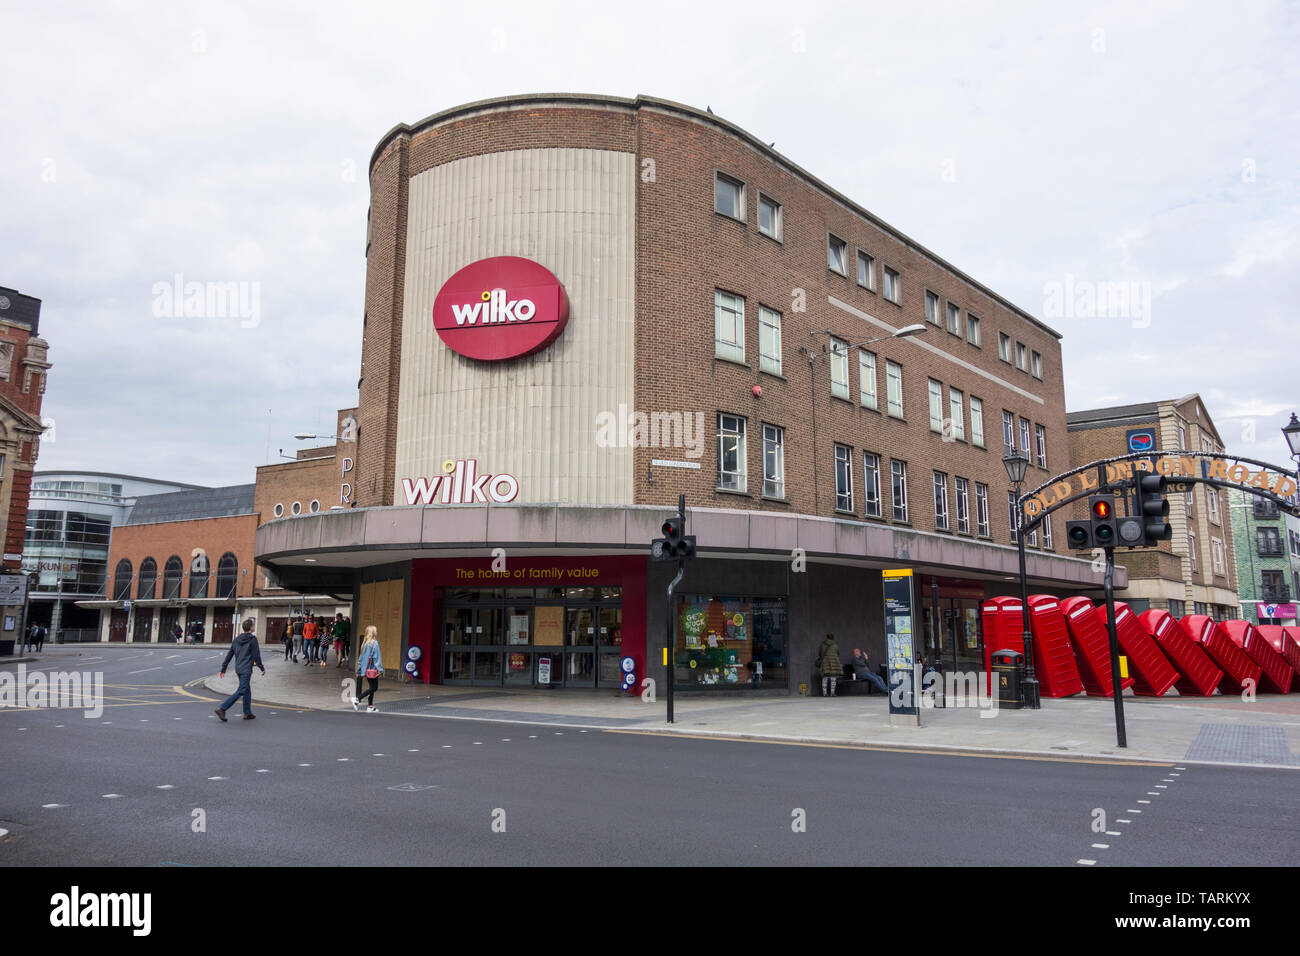 Wilko storefront and logo, Kingston, Surrey, England, U.K. Stock Photo